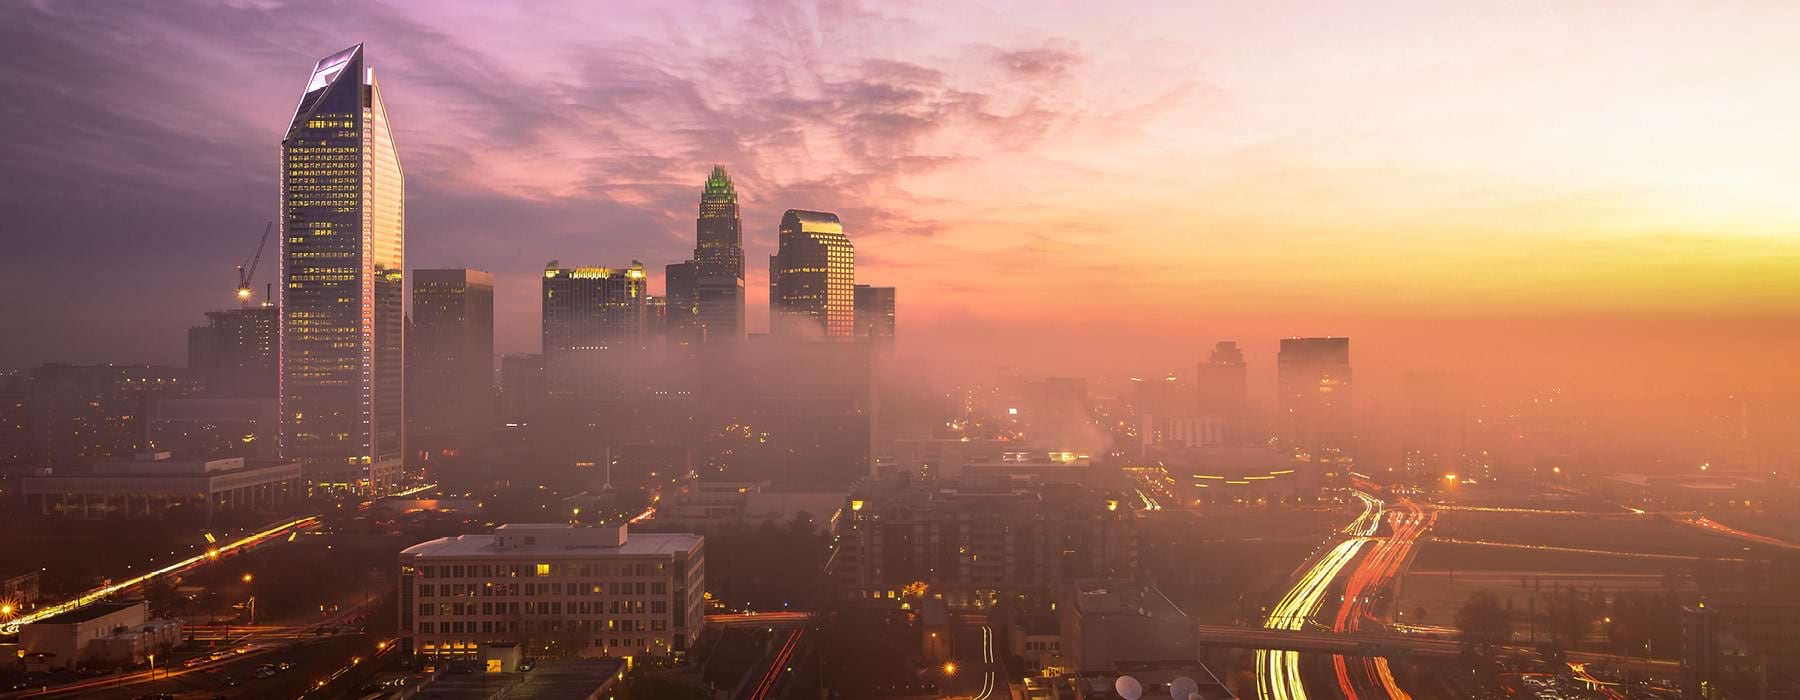 cityscape at dusk as fog rolls in